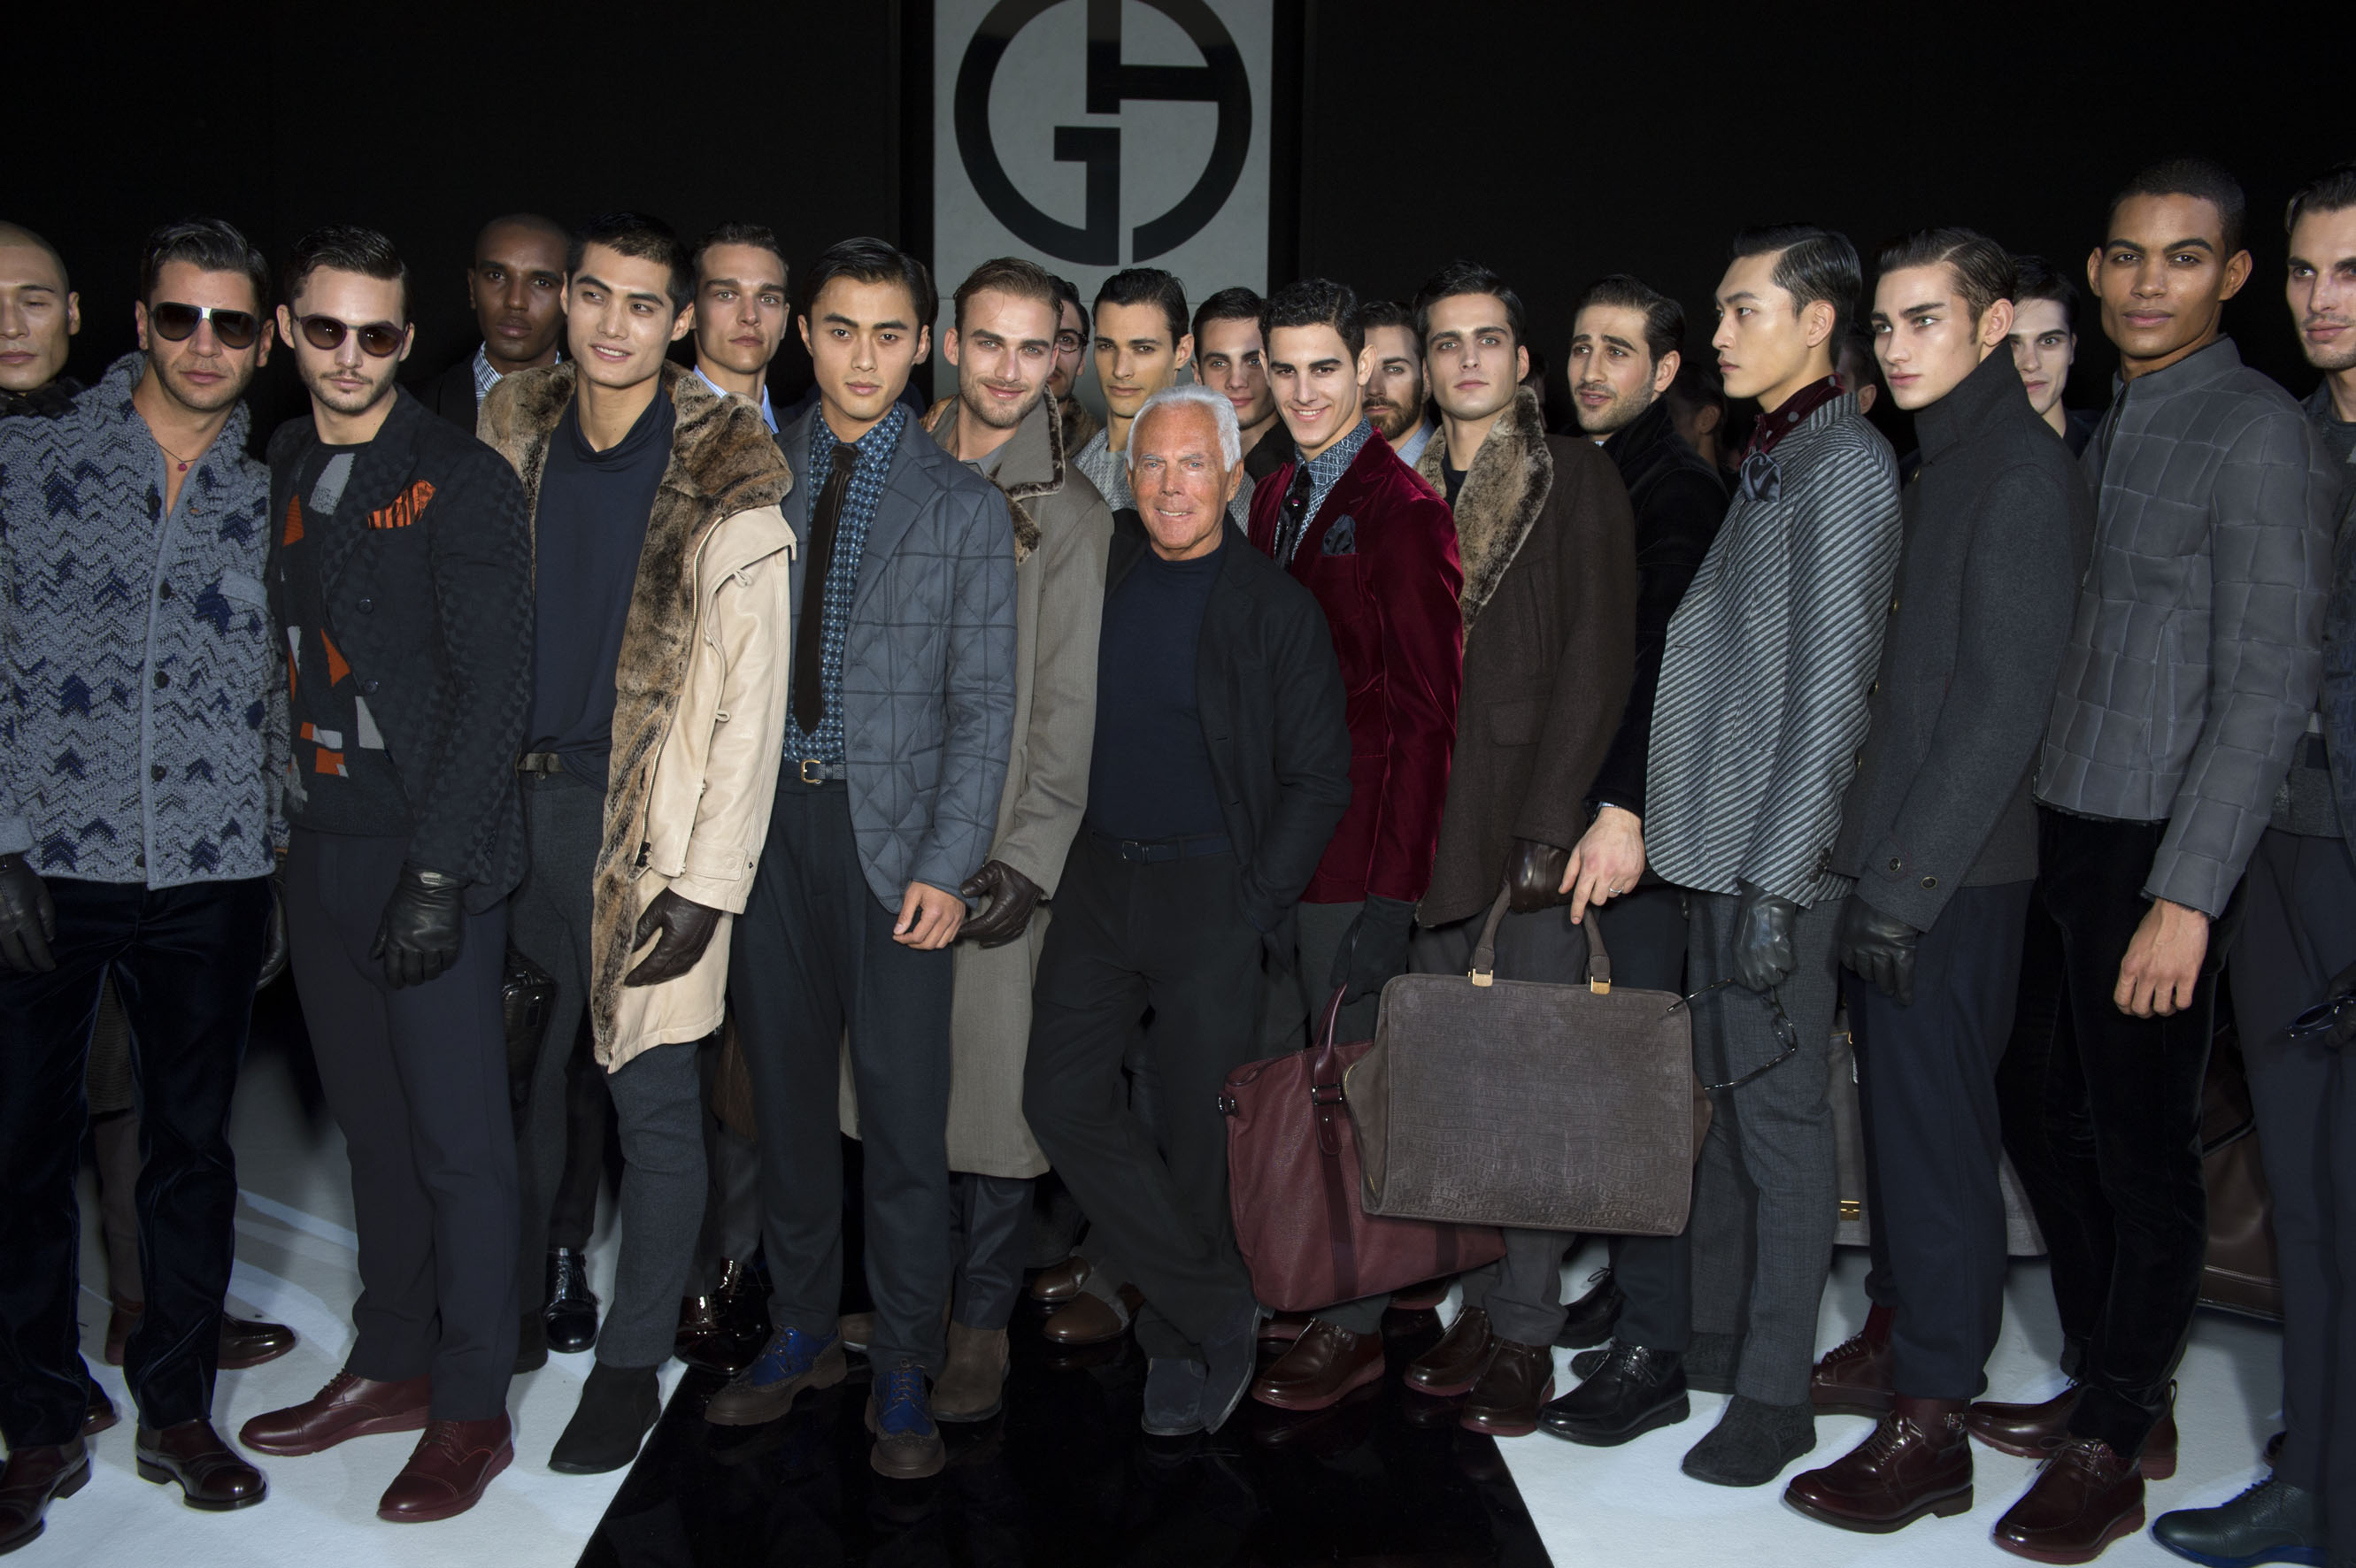 Giorgio Armani with models